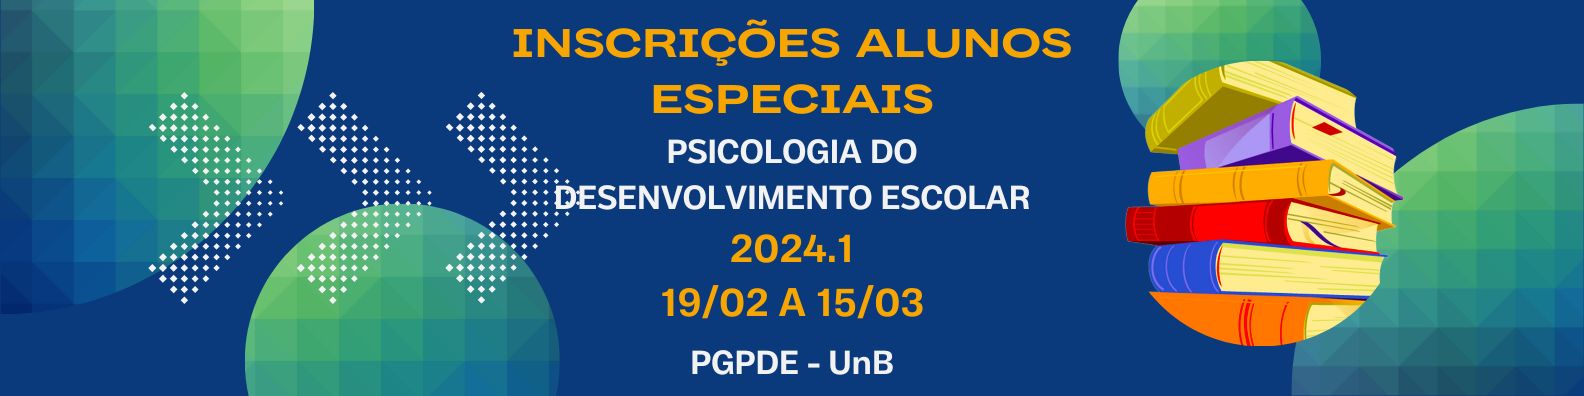 http://www.pgpde.unb.br/index.php/ingresso/aluno-especial/selecoes-alunos-especiais